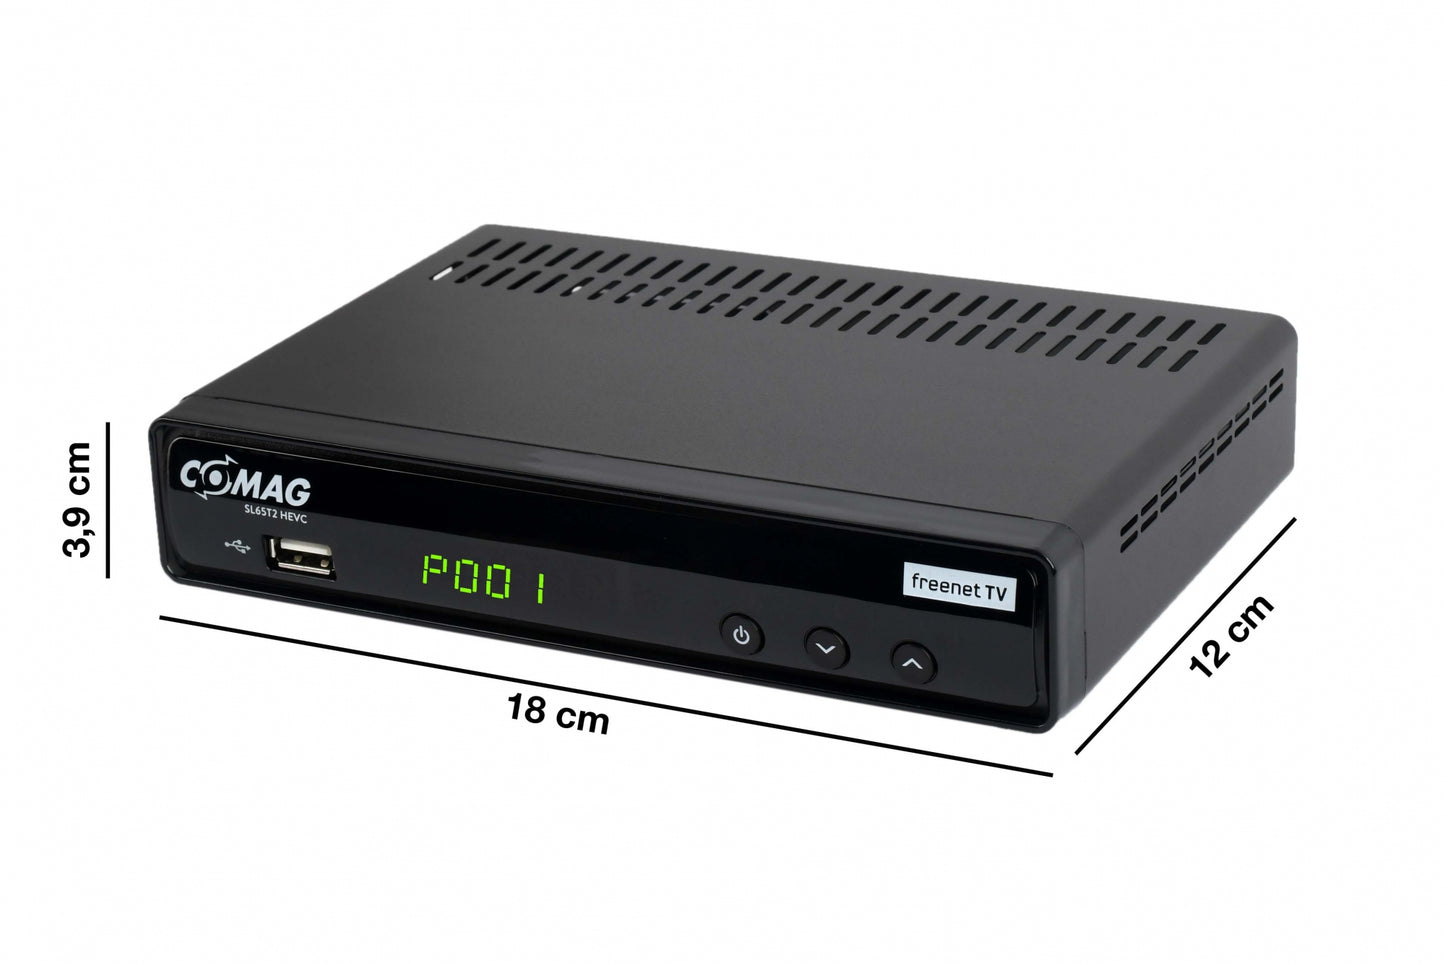 SL 65 T DVB-T2 Receiver Home Bundle